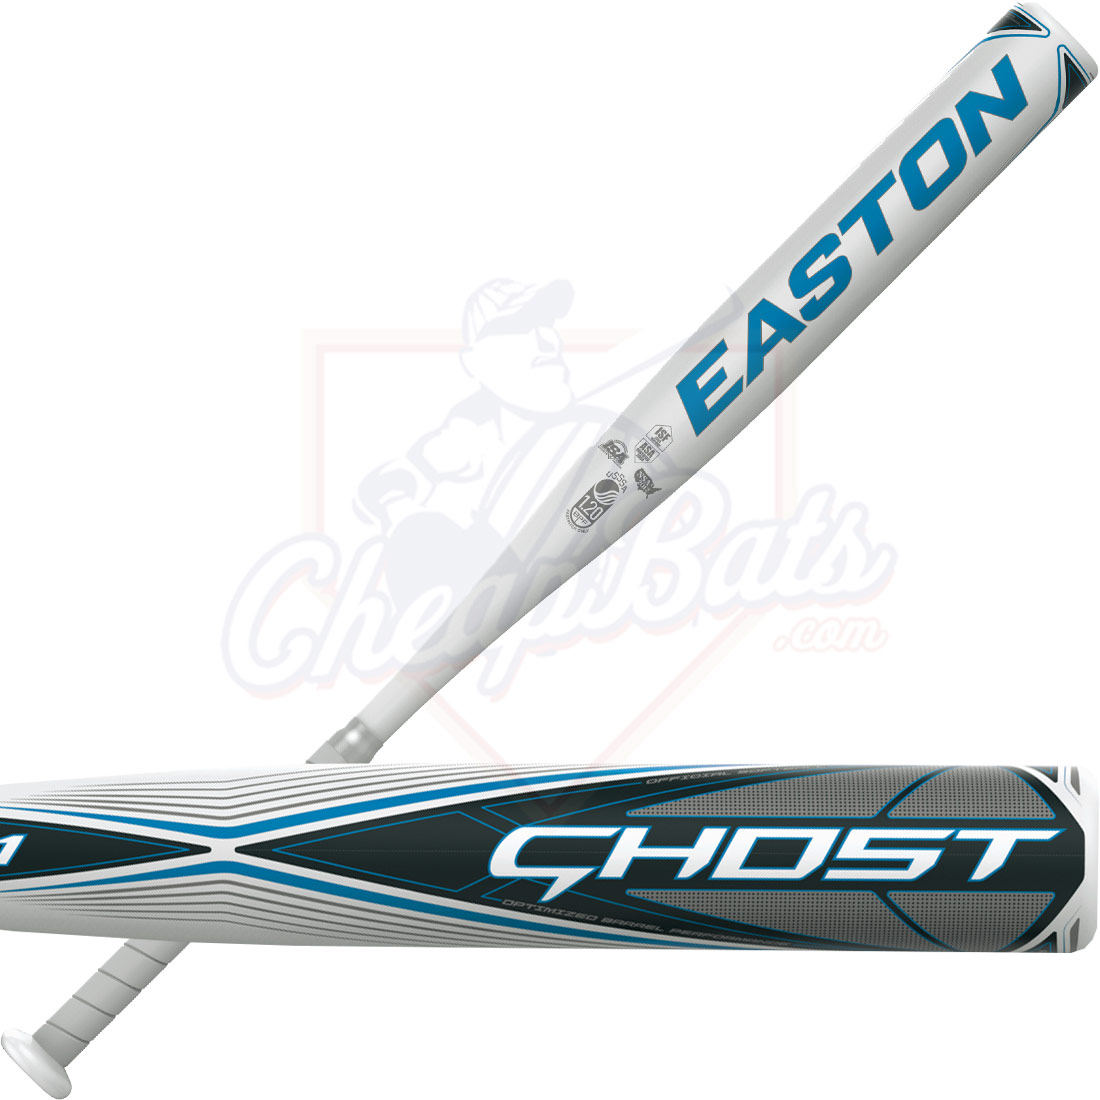 2020 Easton Ghost Youth Fastpitch Softball Bat -11oz FP20GHY11